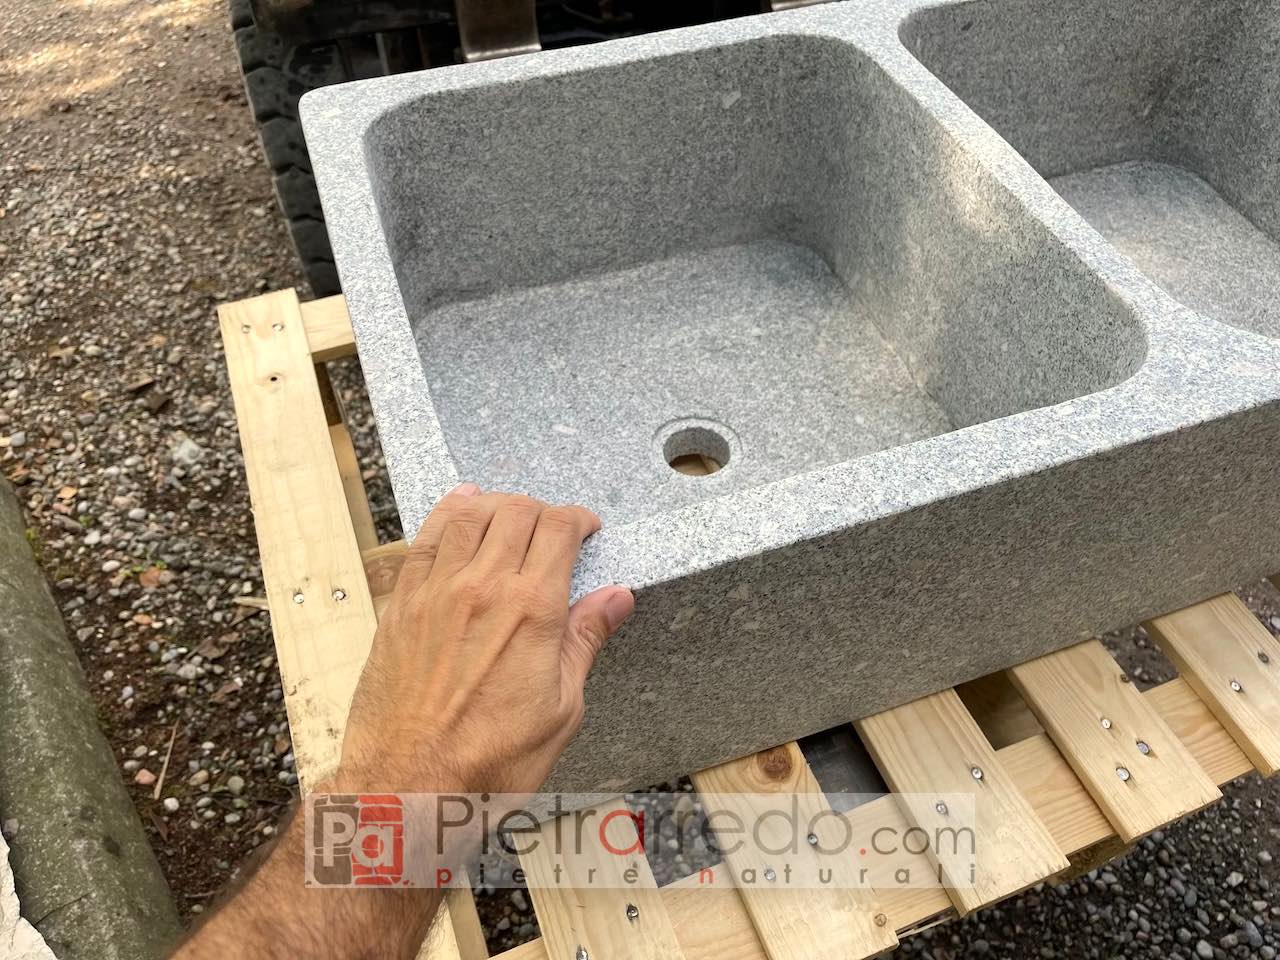 Sink 2 basins in natural granite stone large for rustic kitchen price pietrarredo milan italy stone